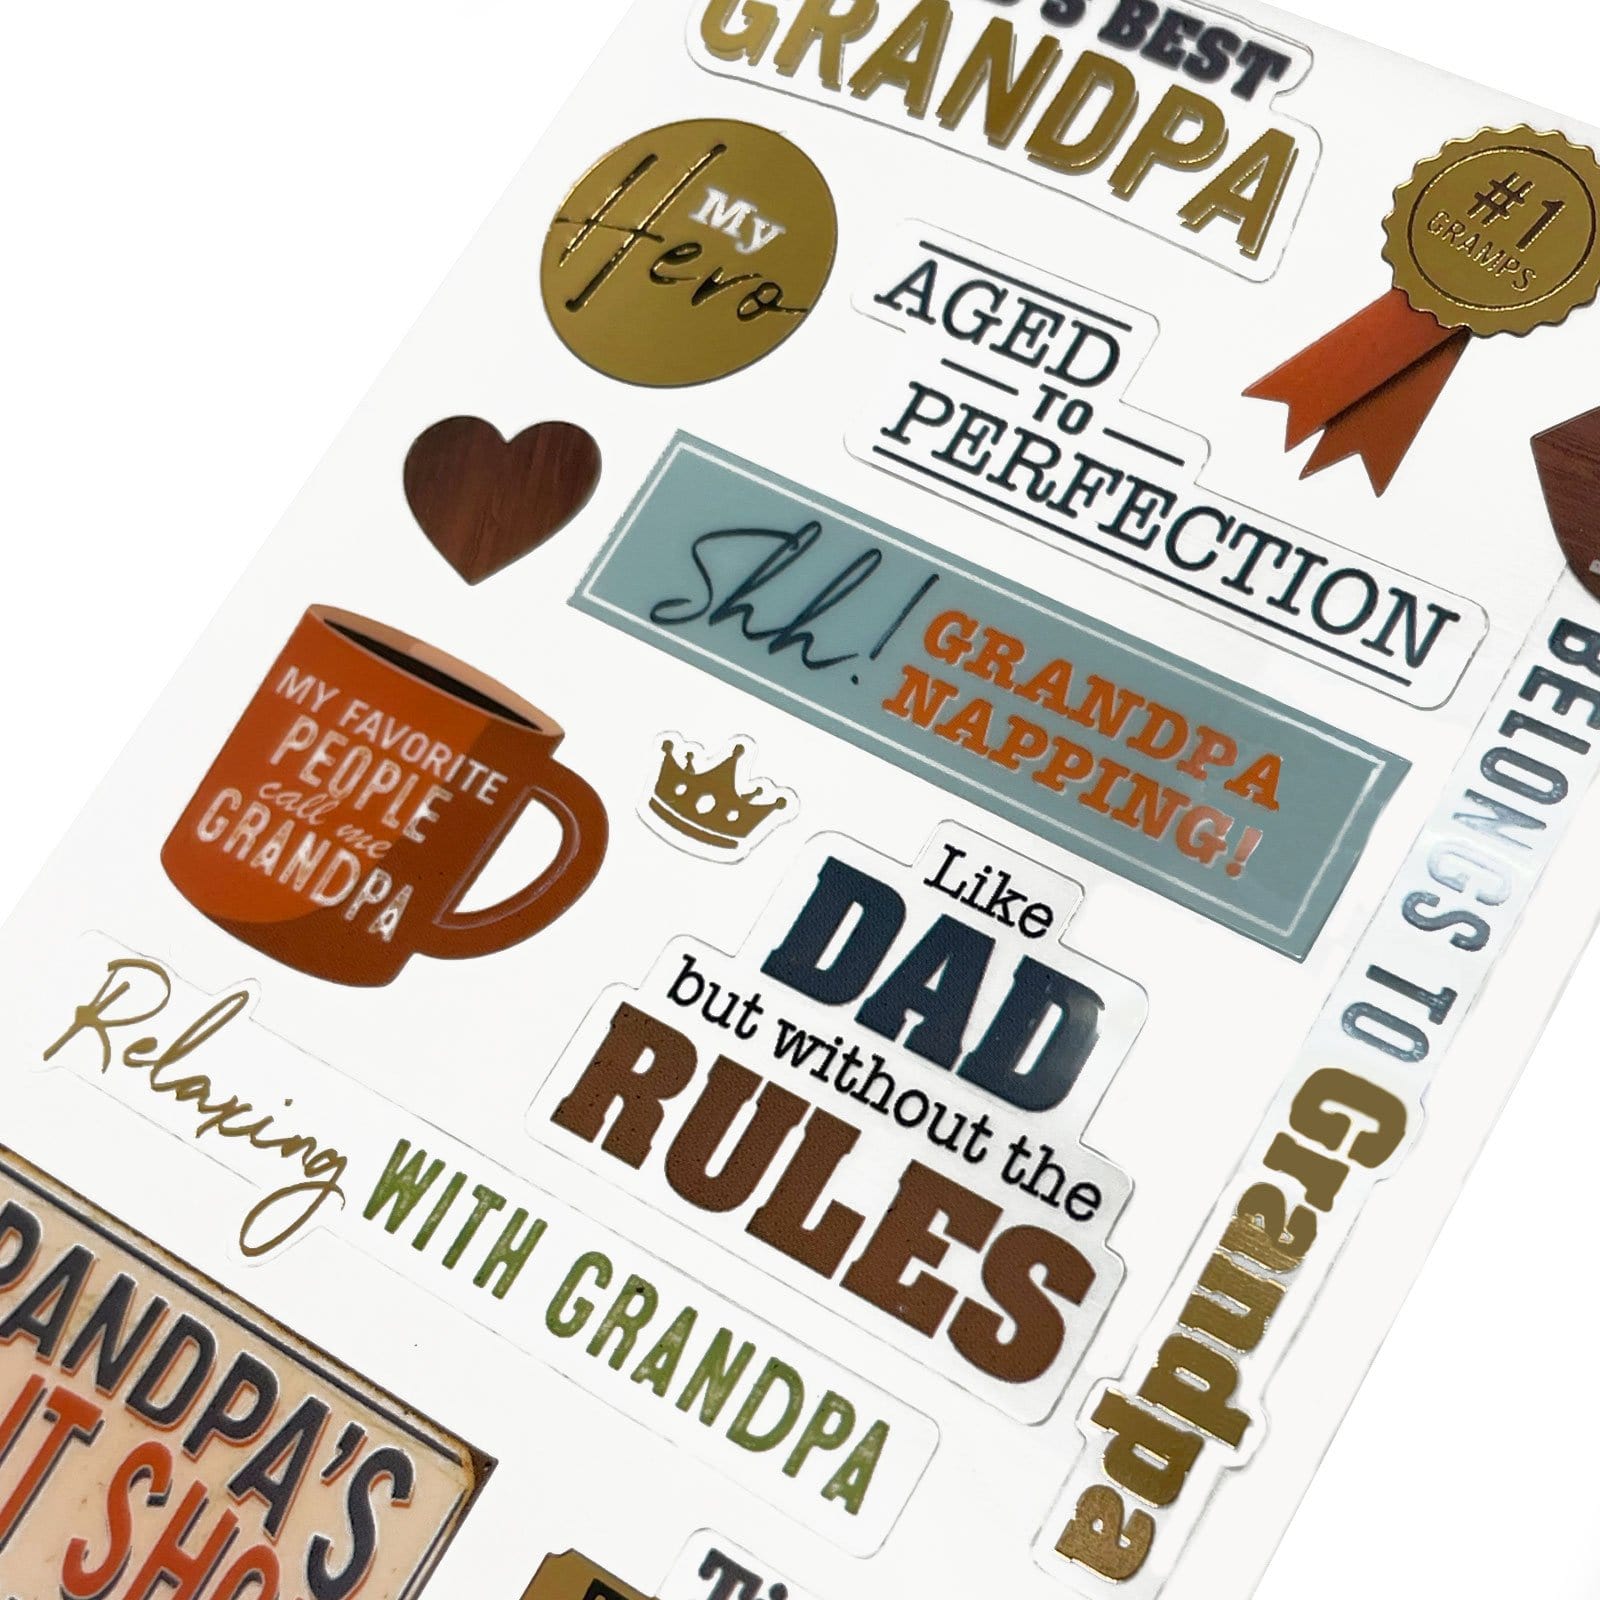 Scrapbook Stickers - Grandma Family